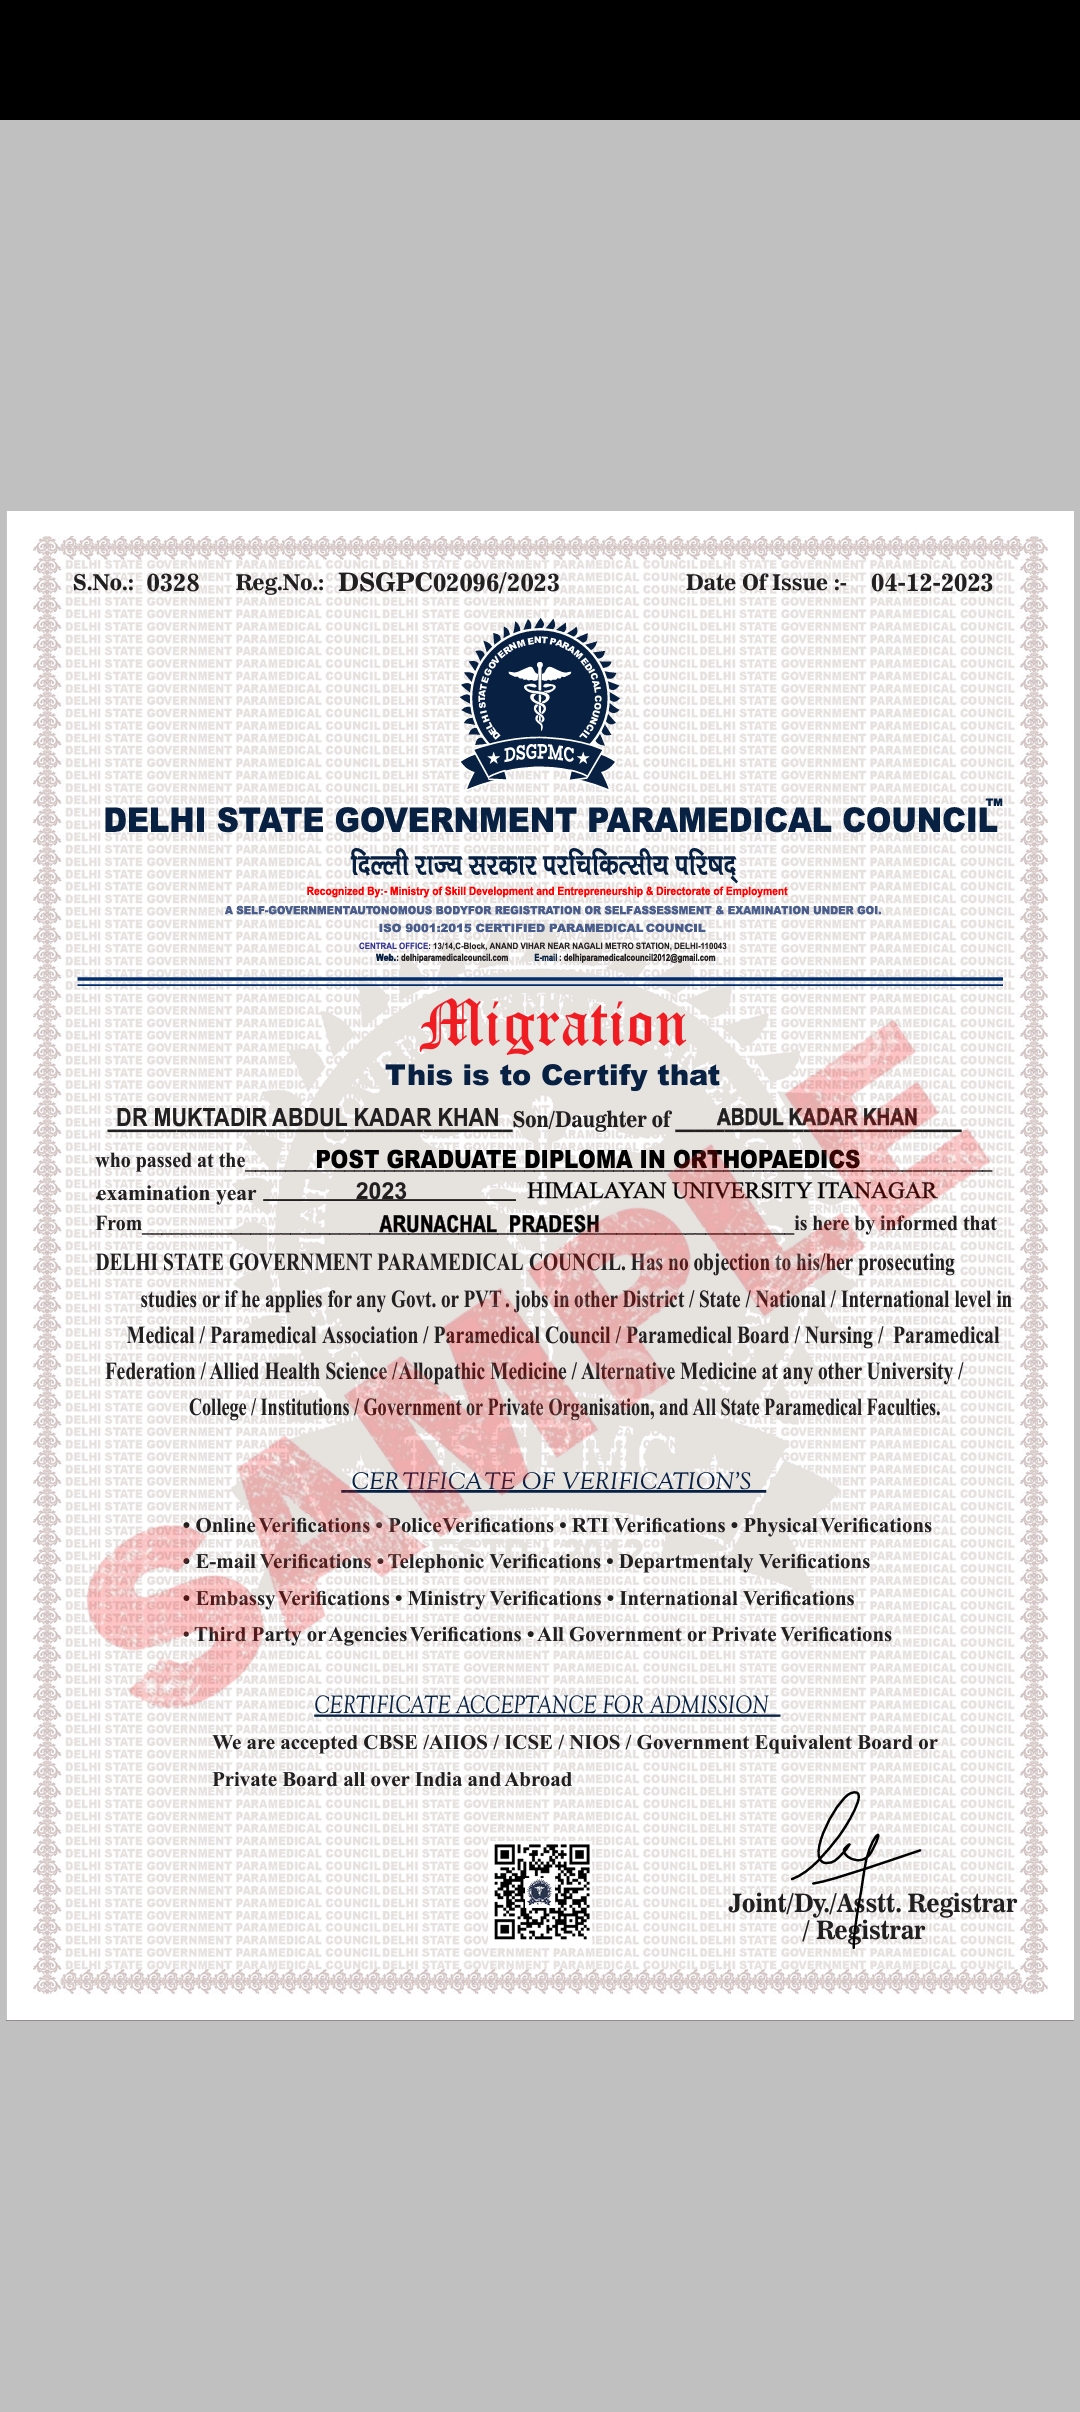 Sample of Migration certificate 